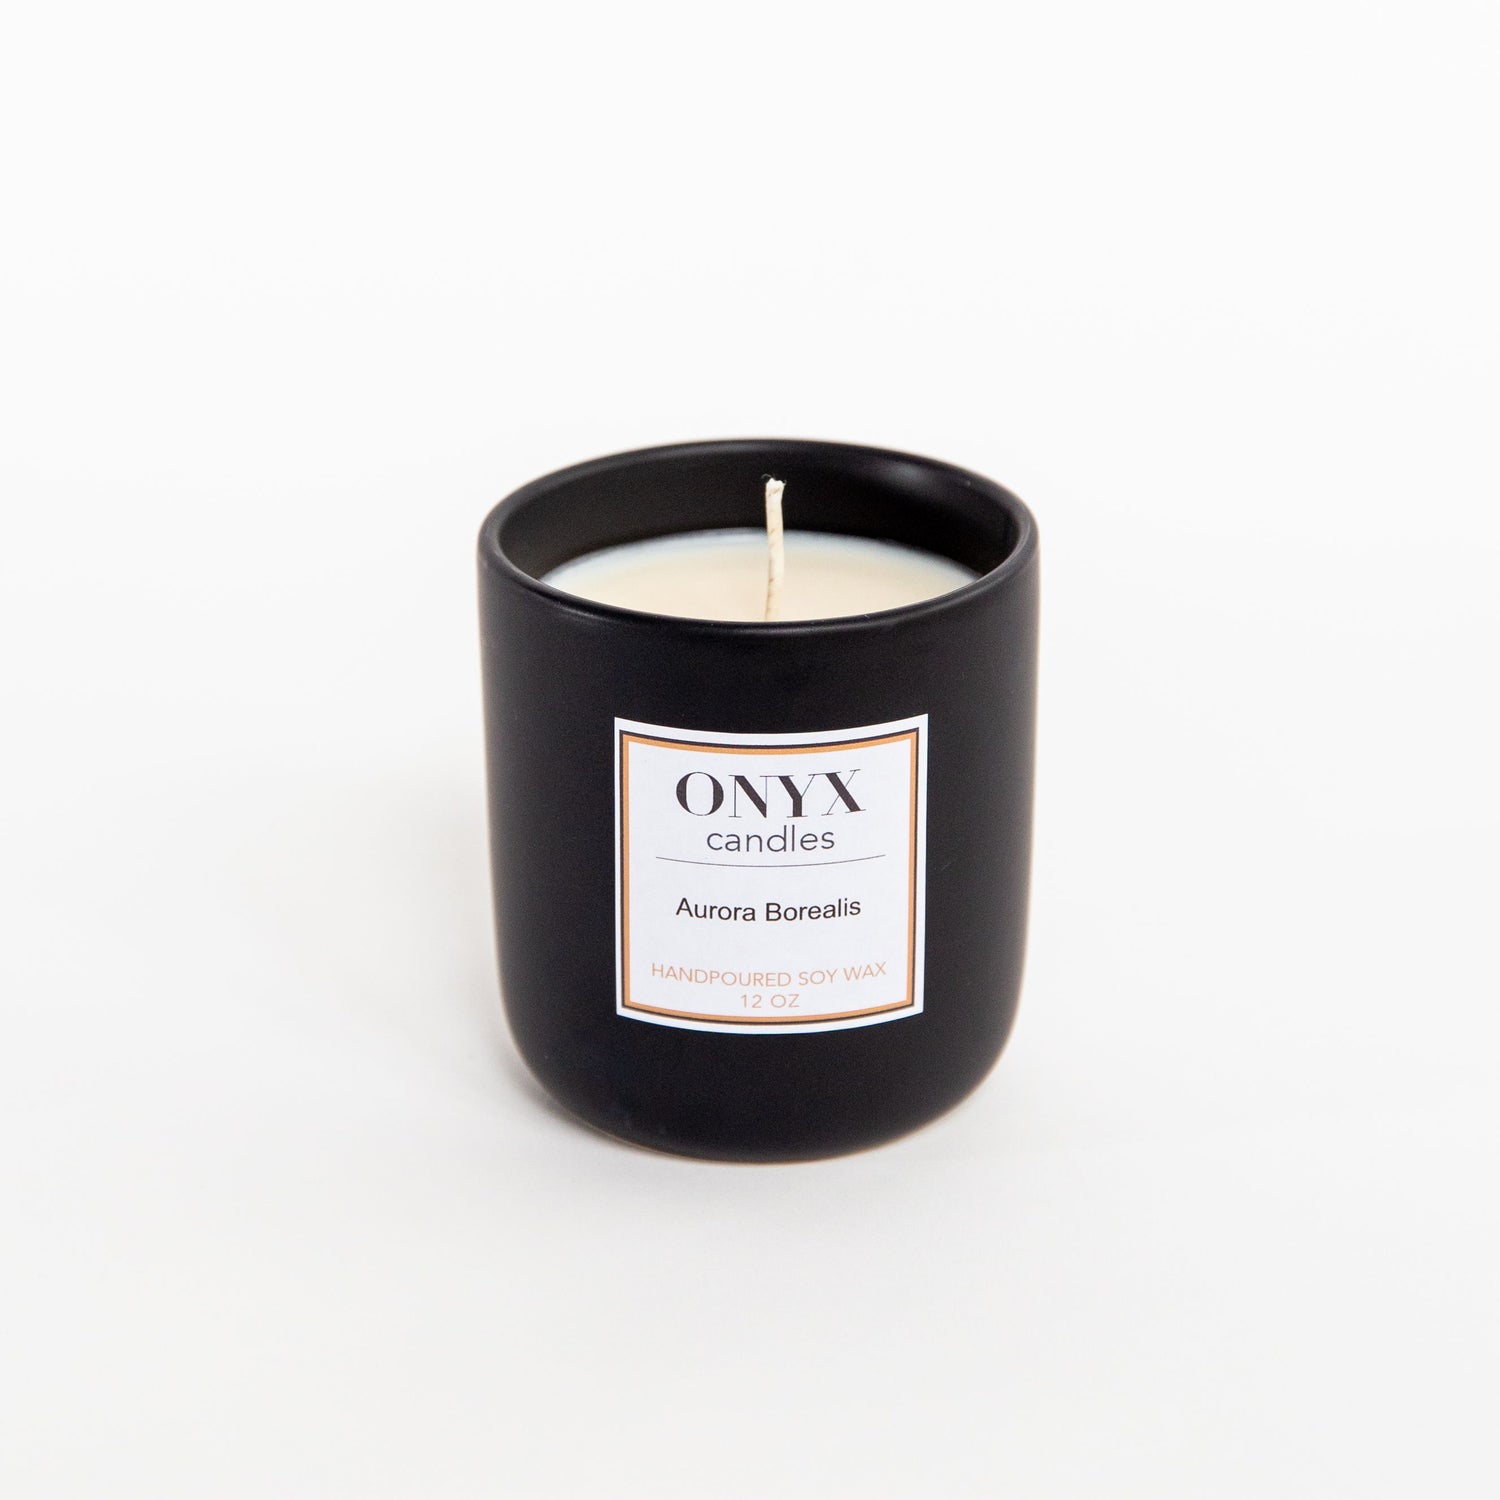 Pictured is the 12 oz matte black ceramic candle, in the scent Aurora Borealis